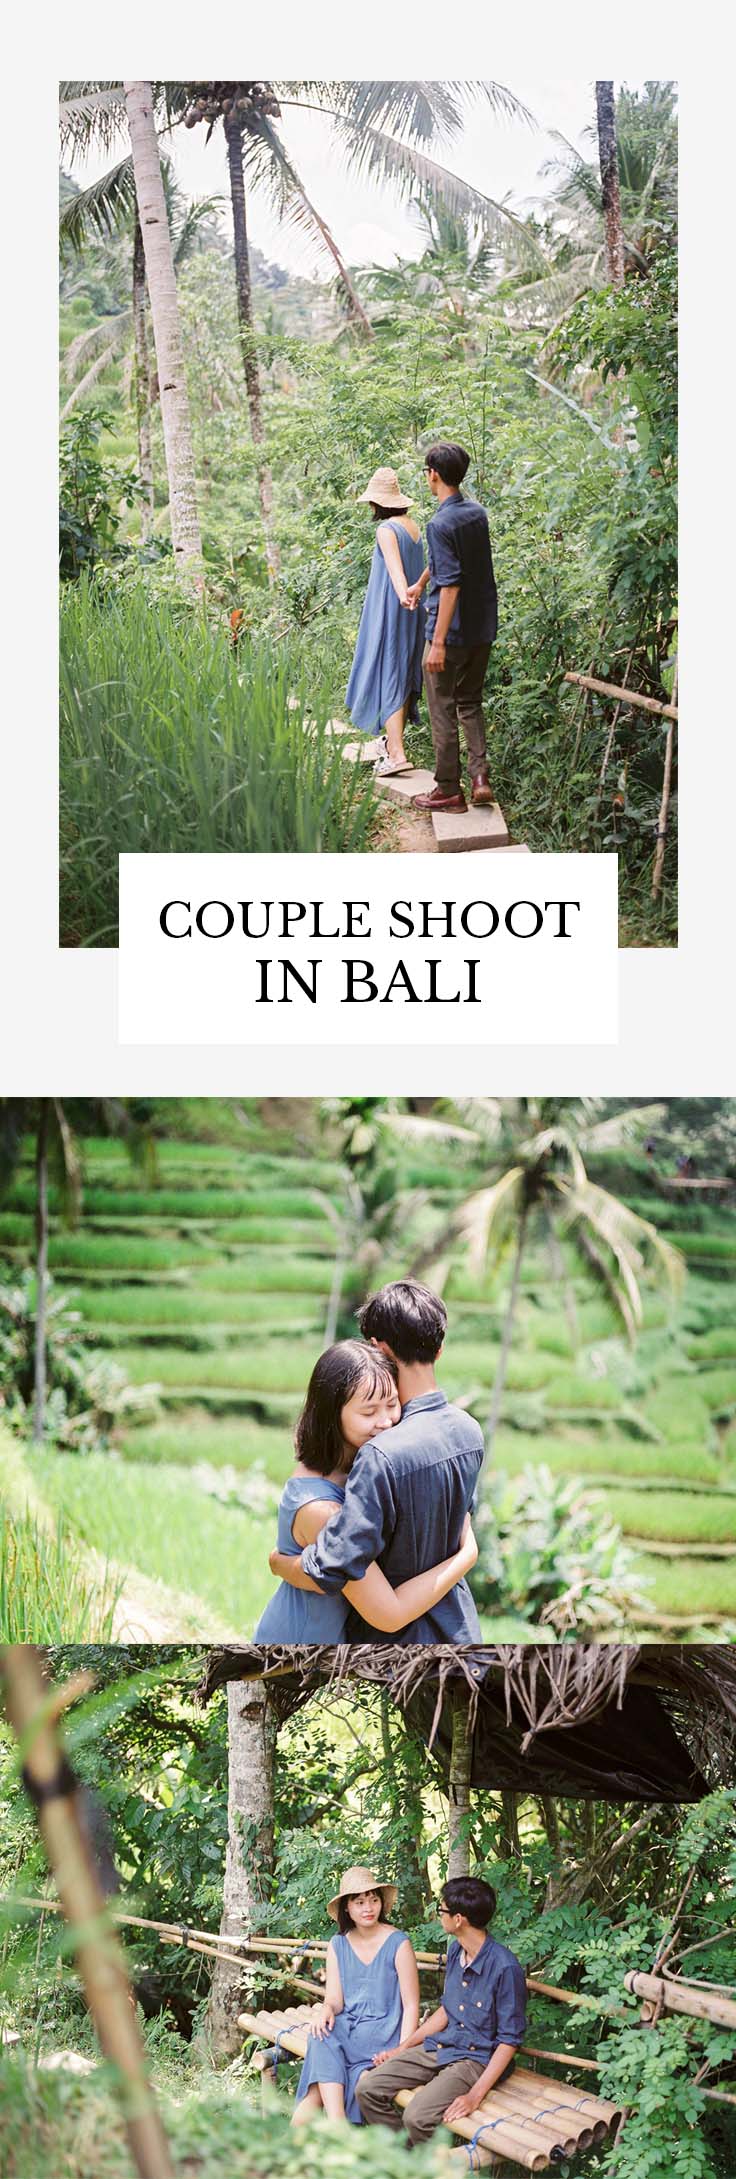 COUPLE SHOOT IN BALI